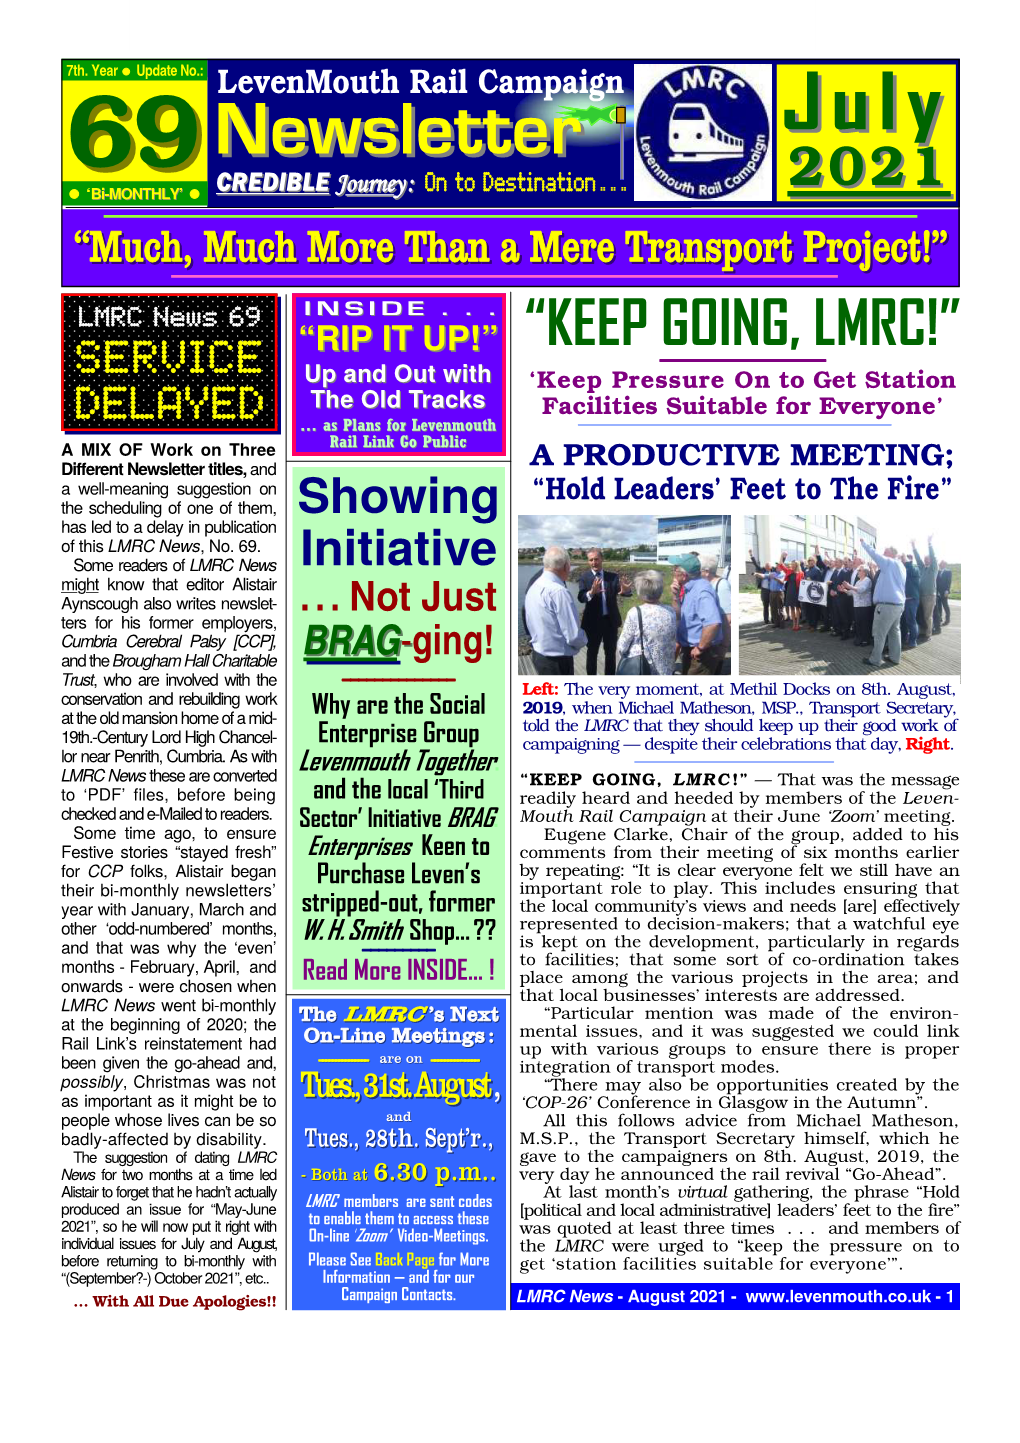 LMRC News 69S (July '21)